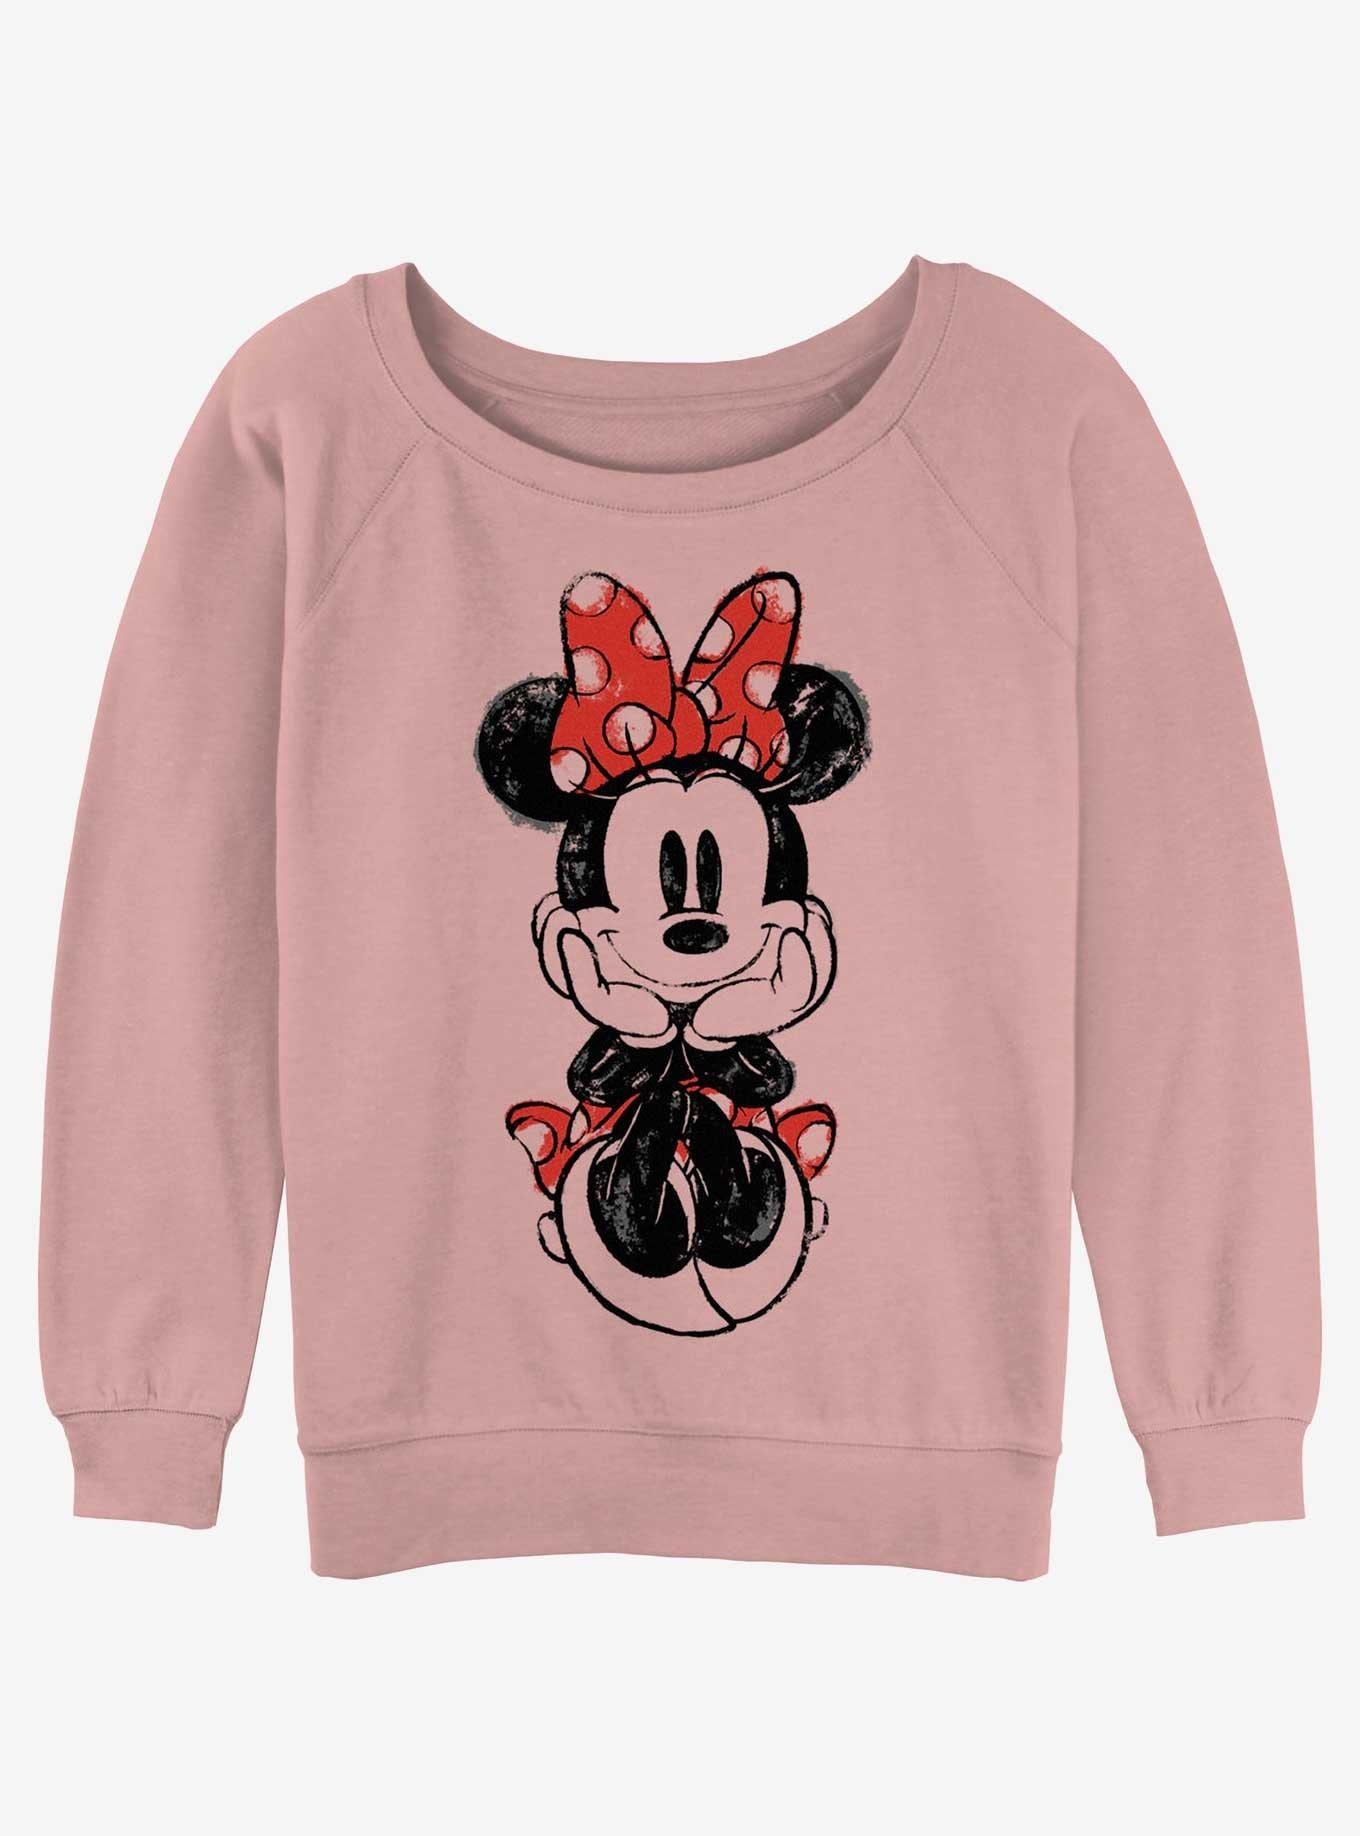 Disney Minnie Mouse Sitting Sketch Girls Slouchy Sweatshirt